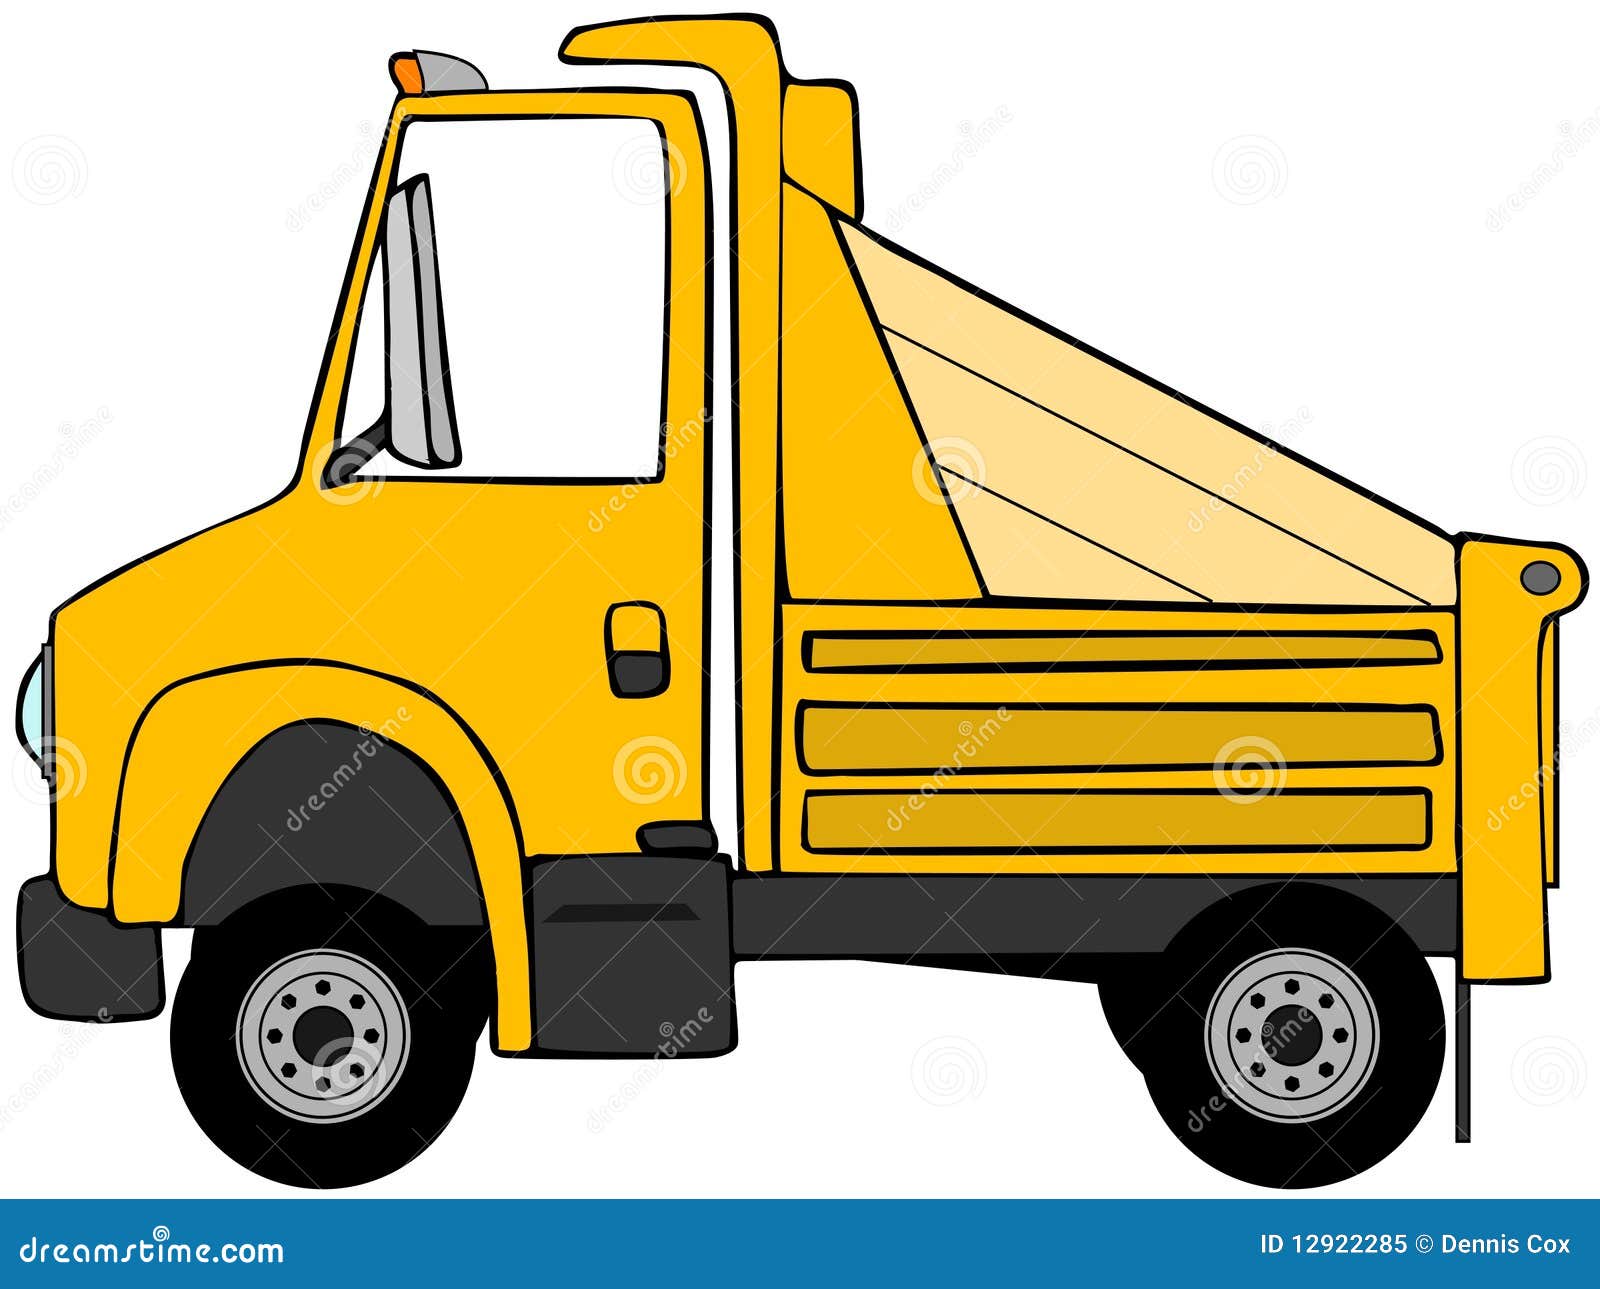 Yellow Dump Truck Royalty Free Stock Photo  Image: 12922285